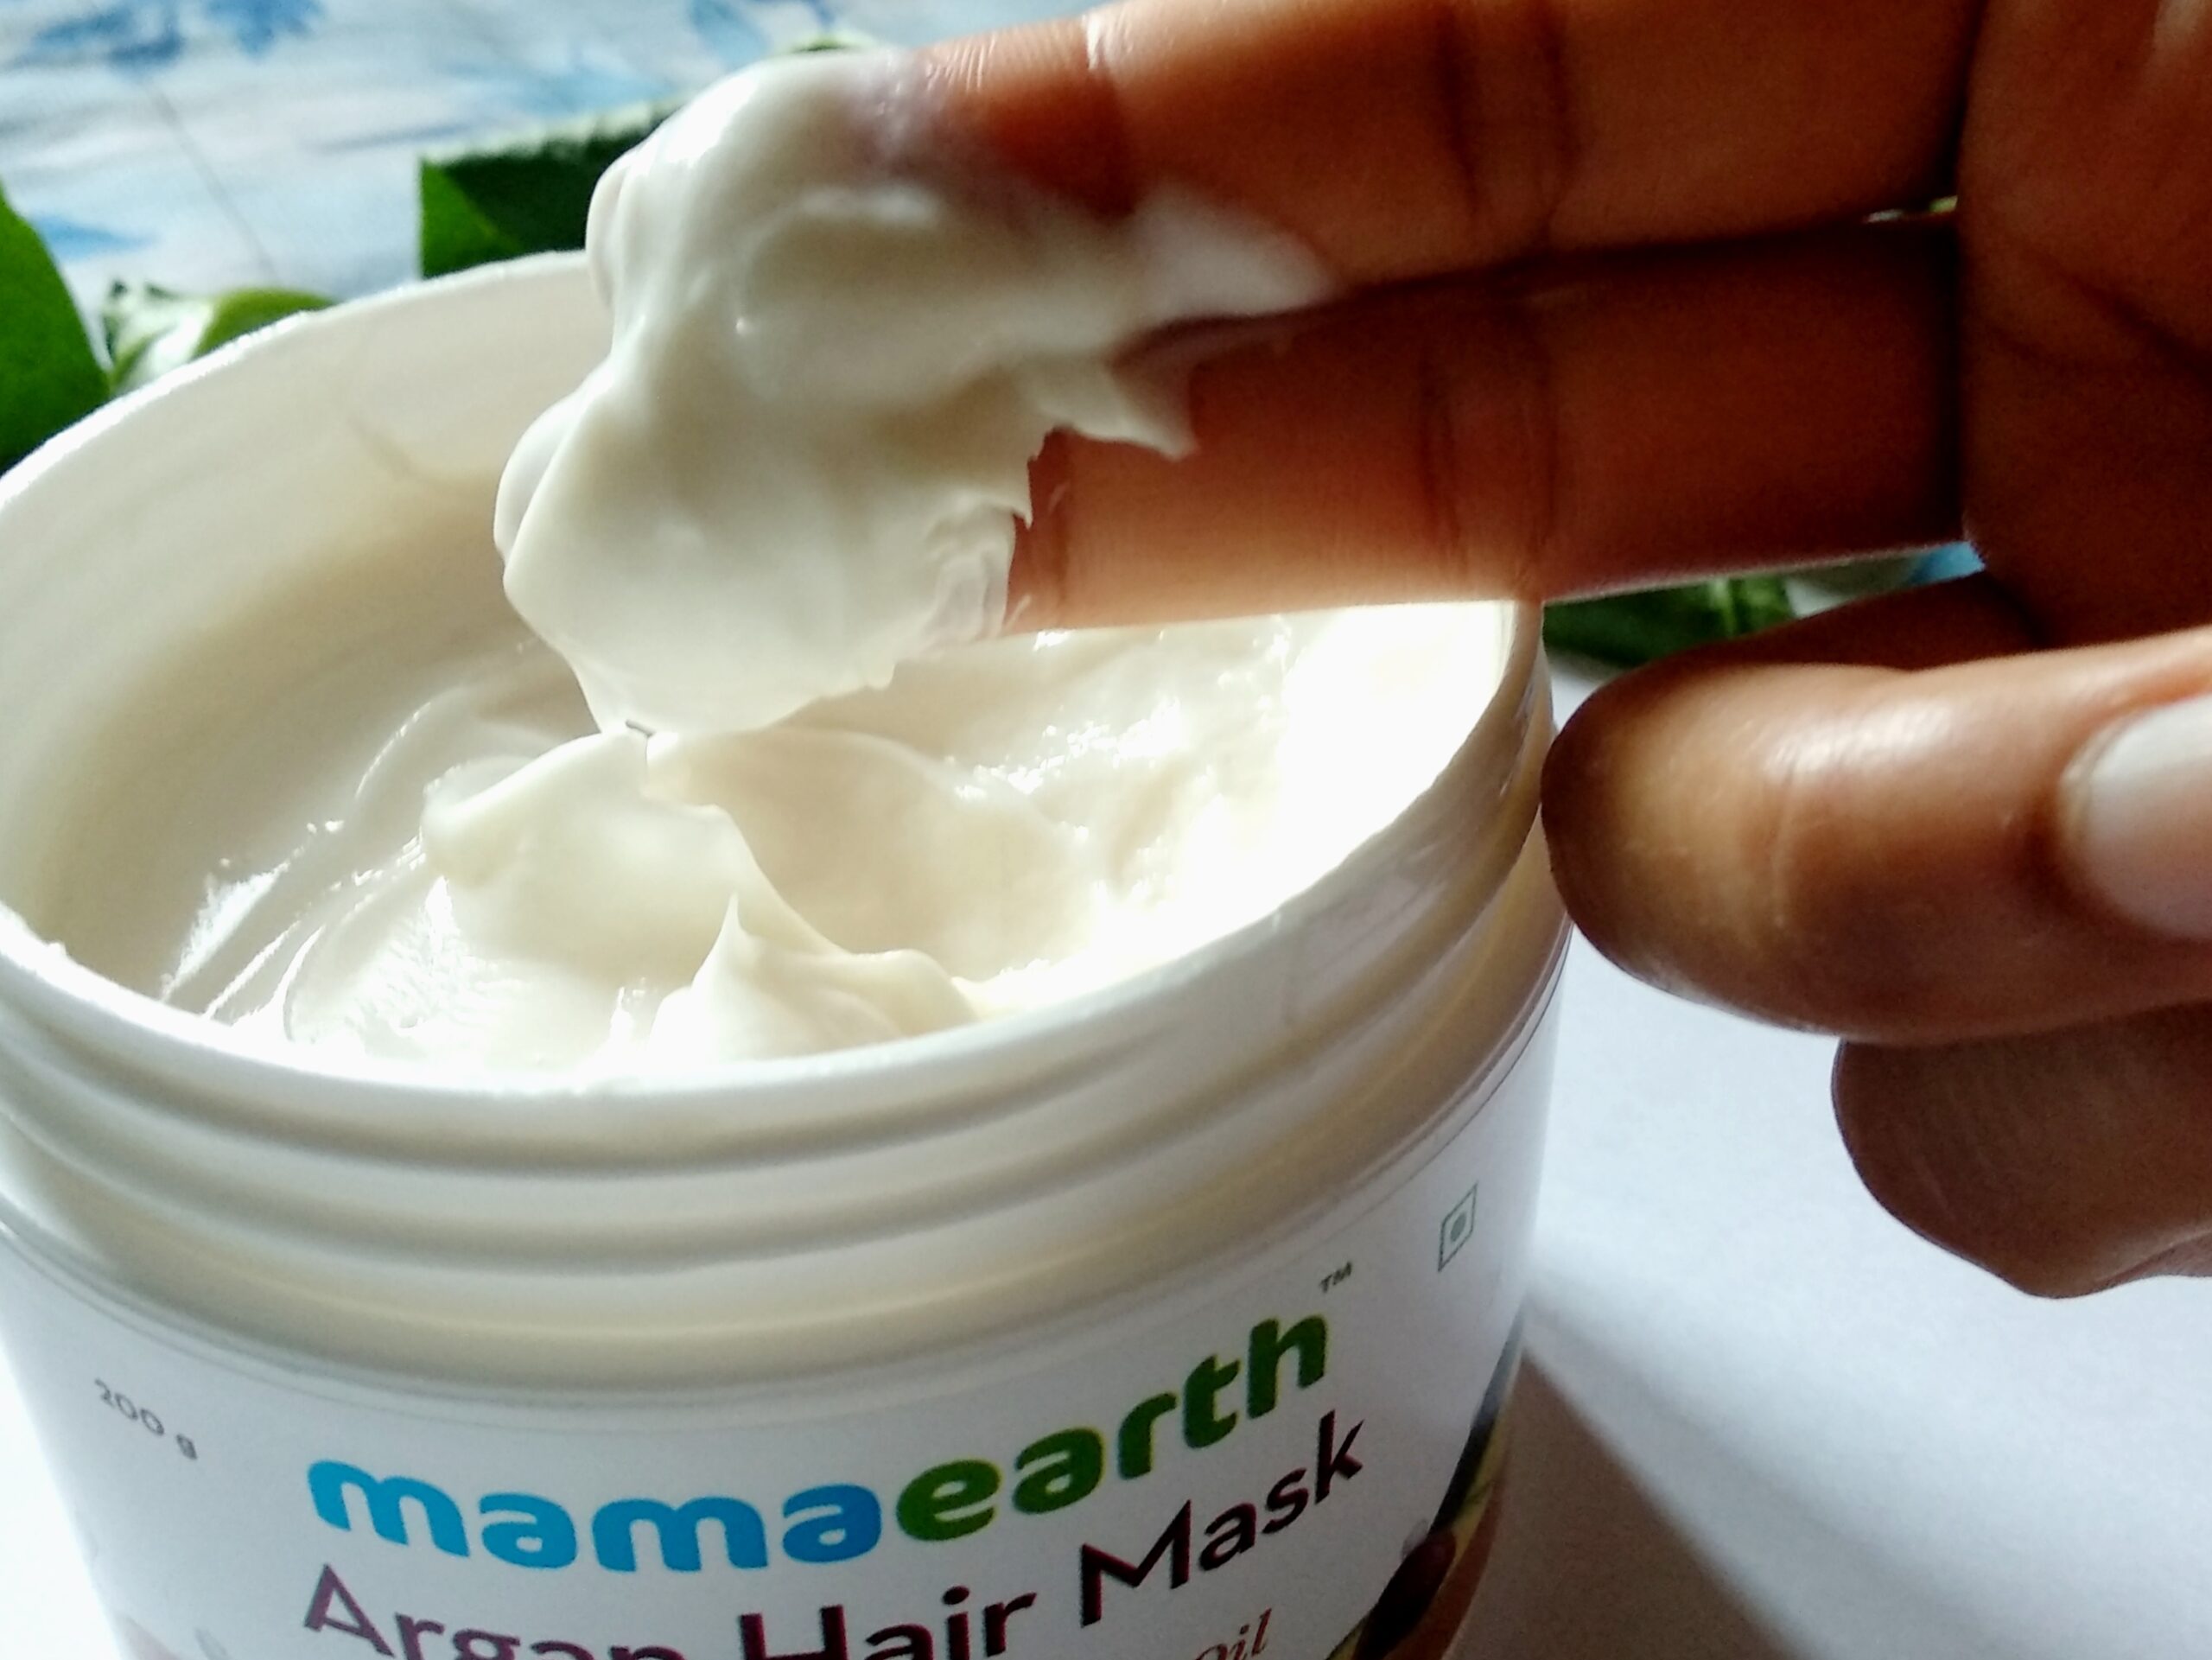 Mamaearth Argan hair mask review1